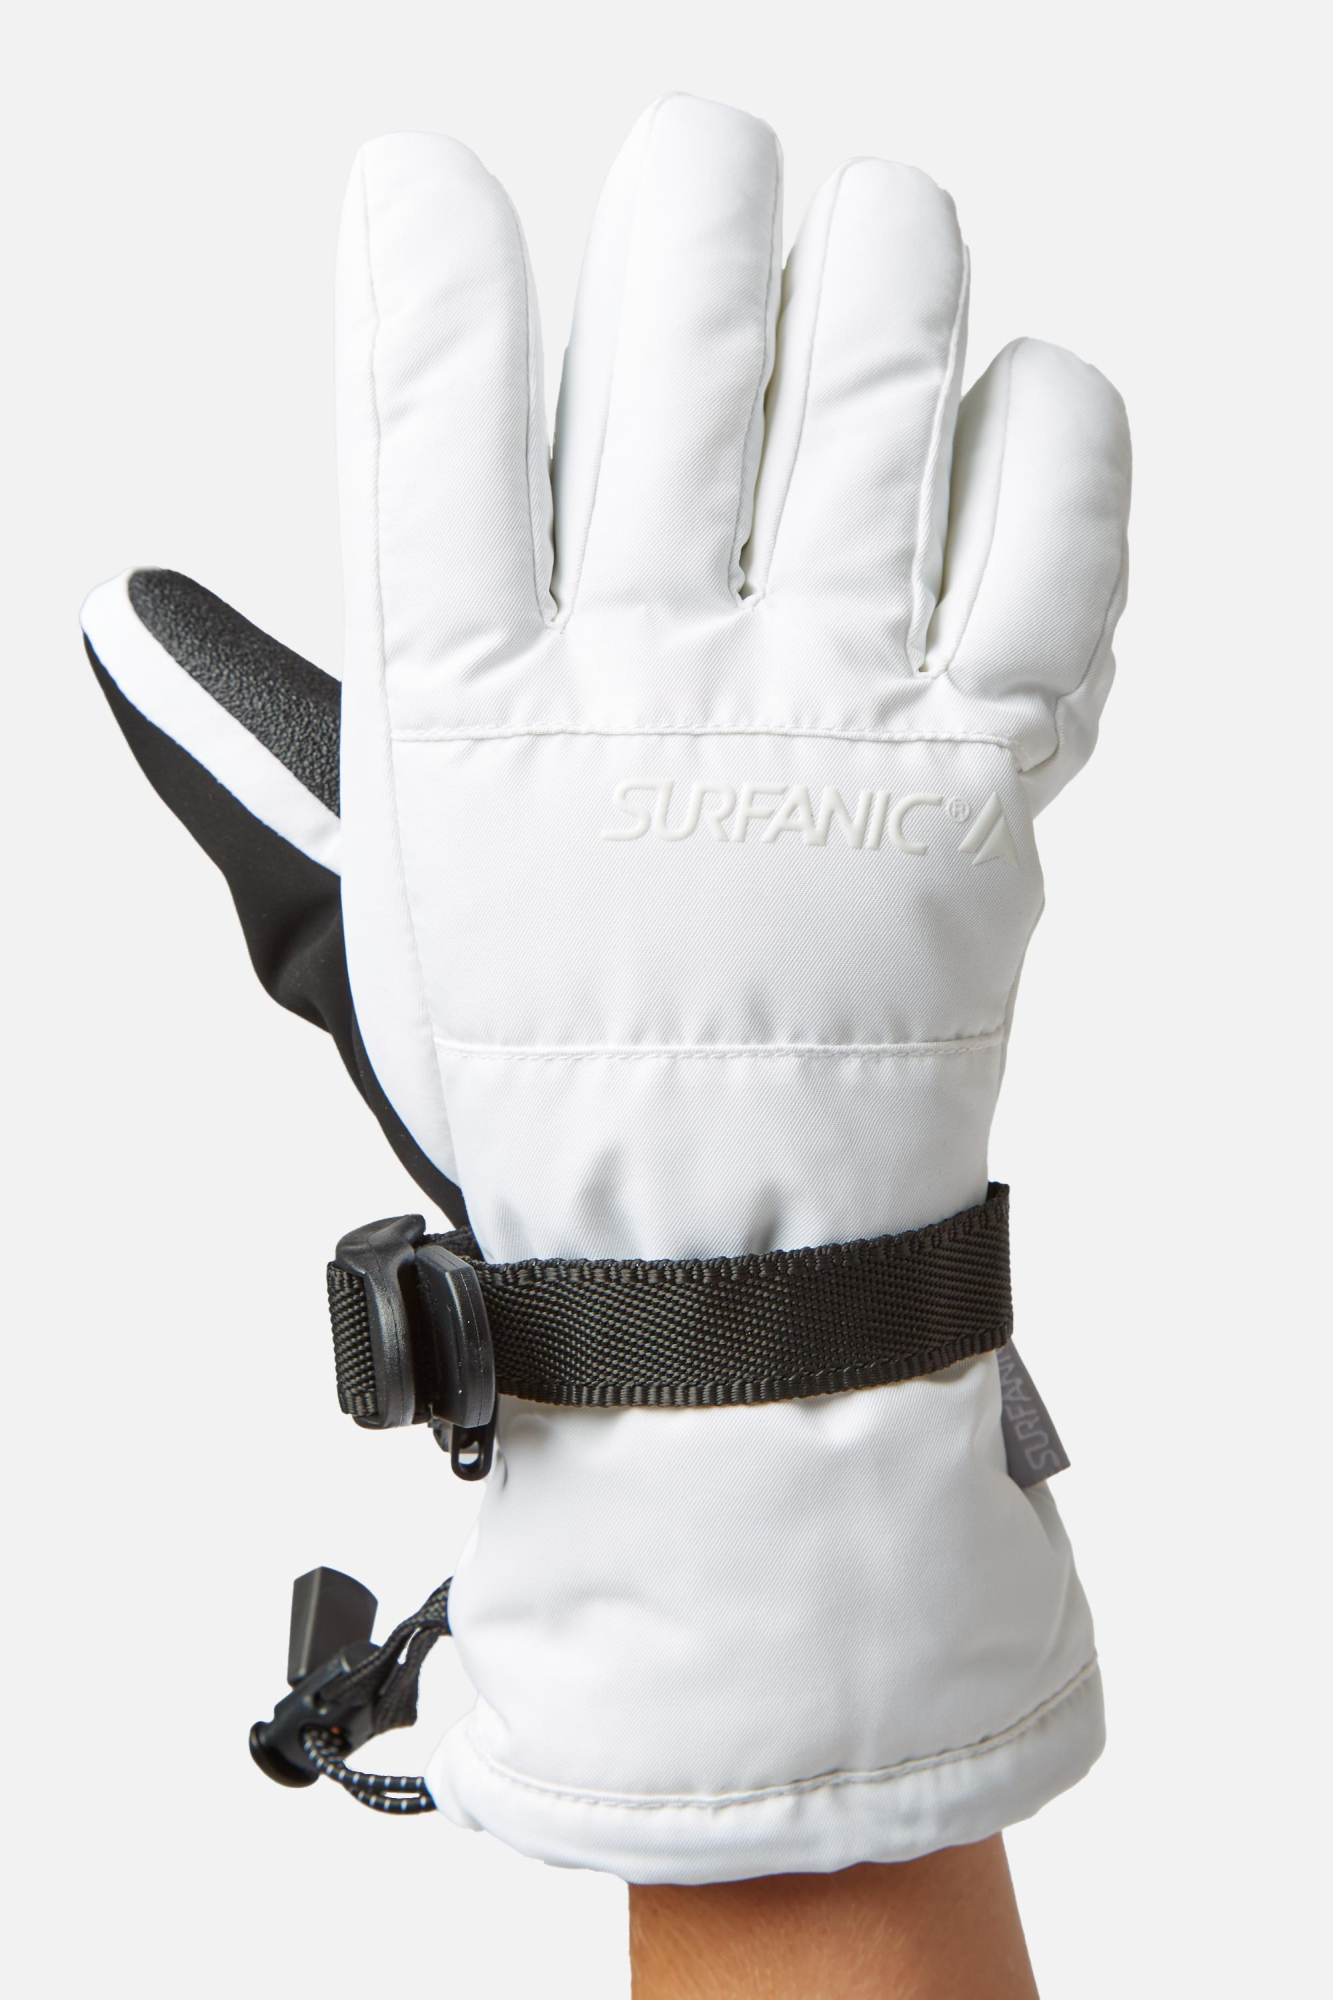 Surfanic Womens Alaska Glove White - Size: Small